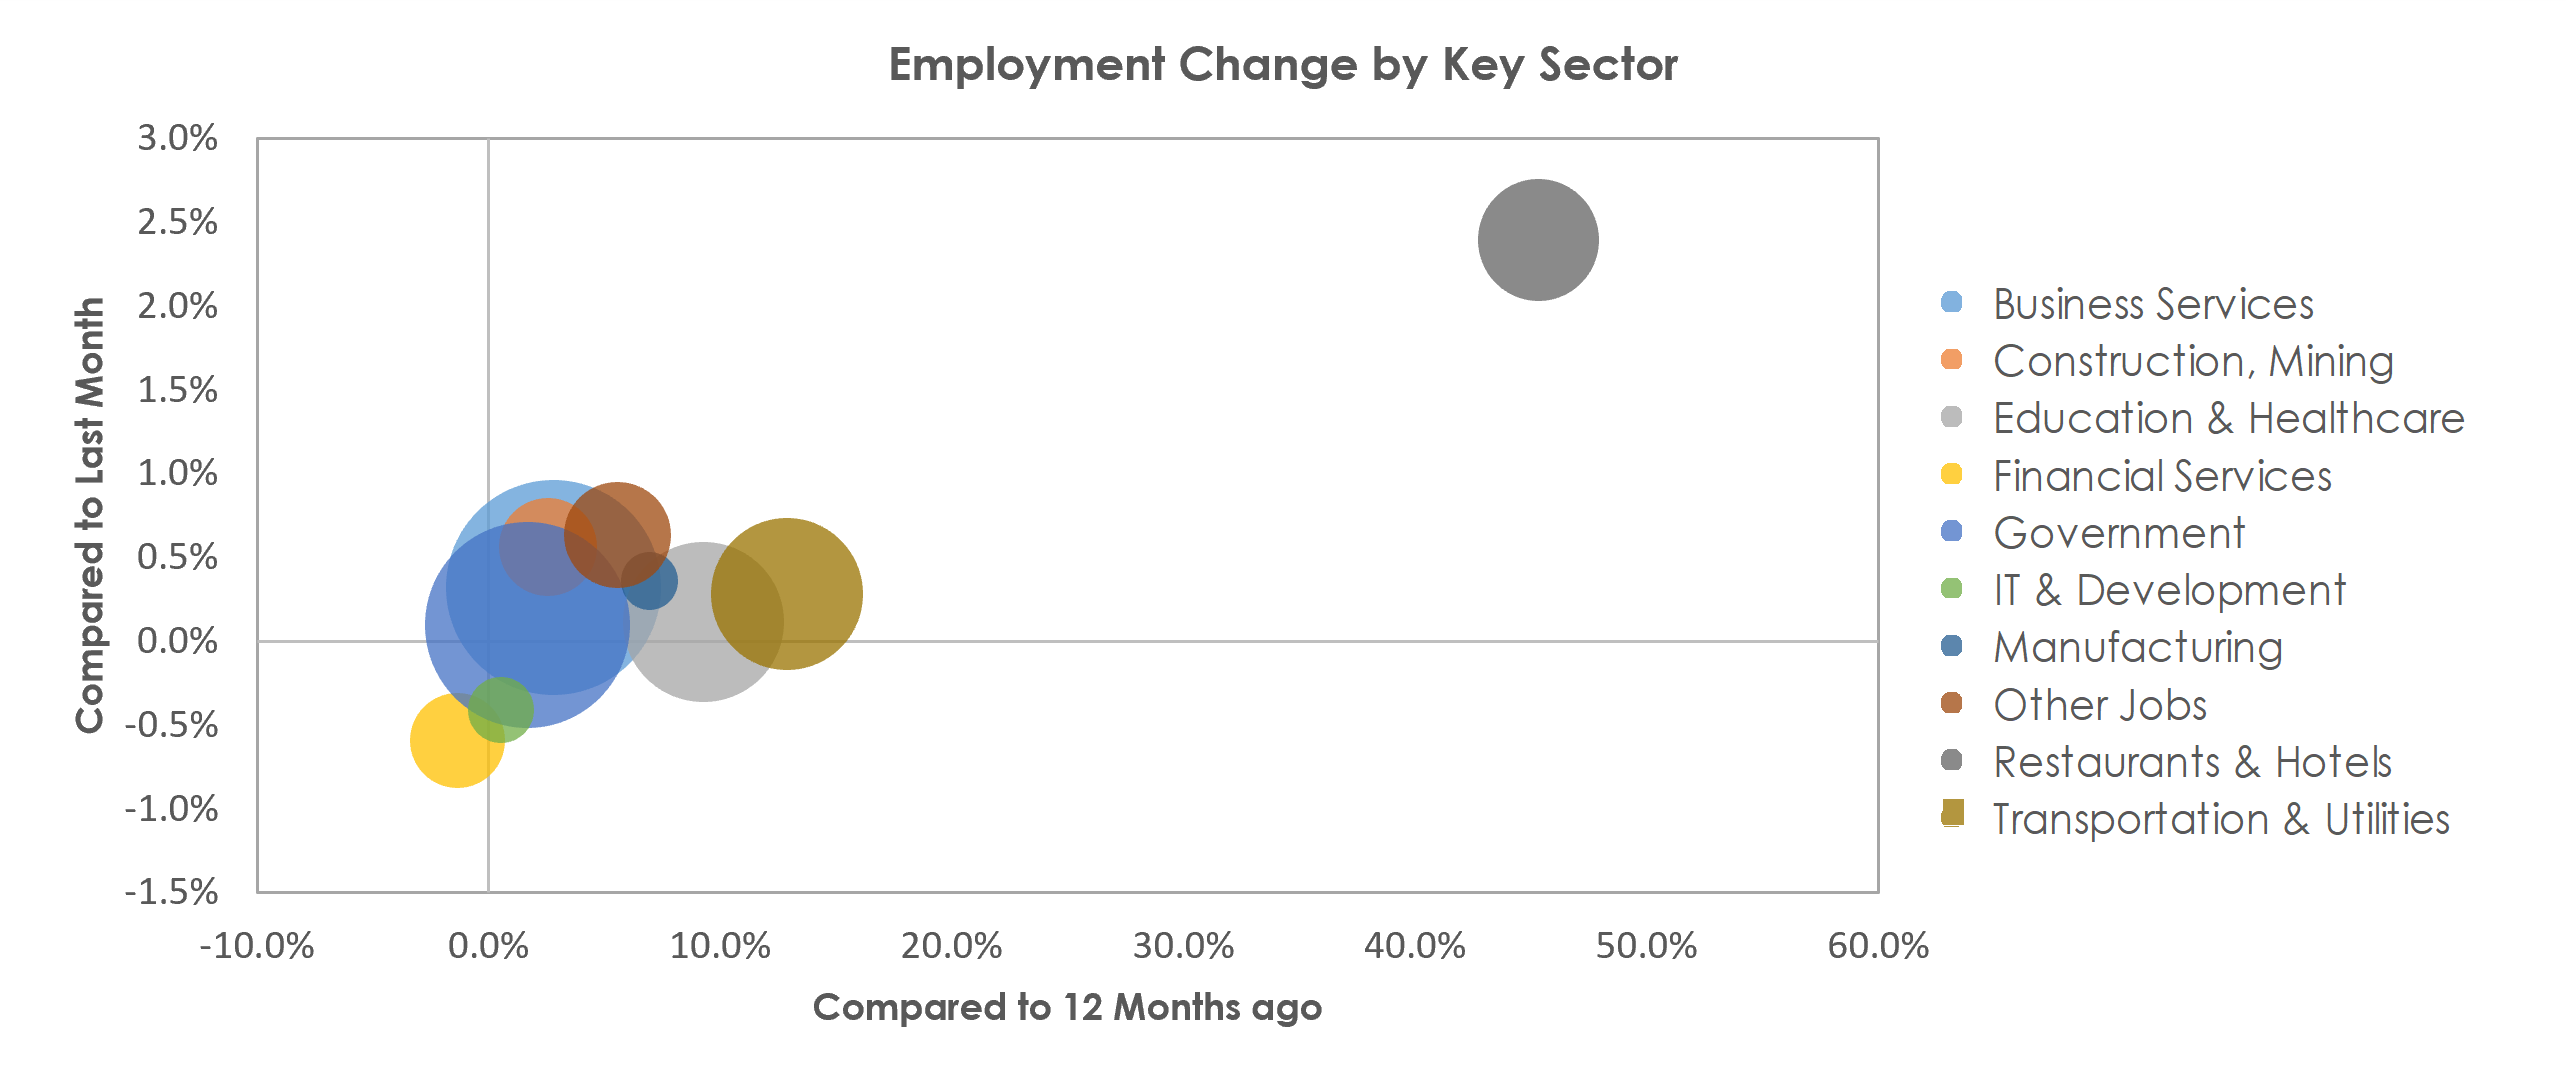 Washington-Arlington-Alexandria, DC-VA-MD-WV Unemployment by Industry May 2021